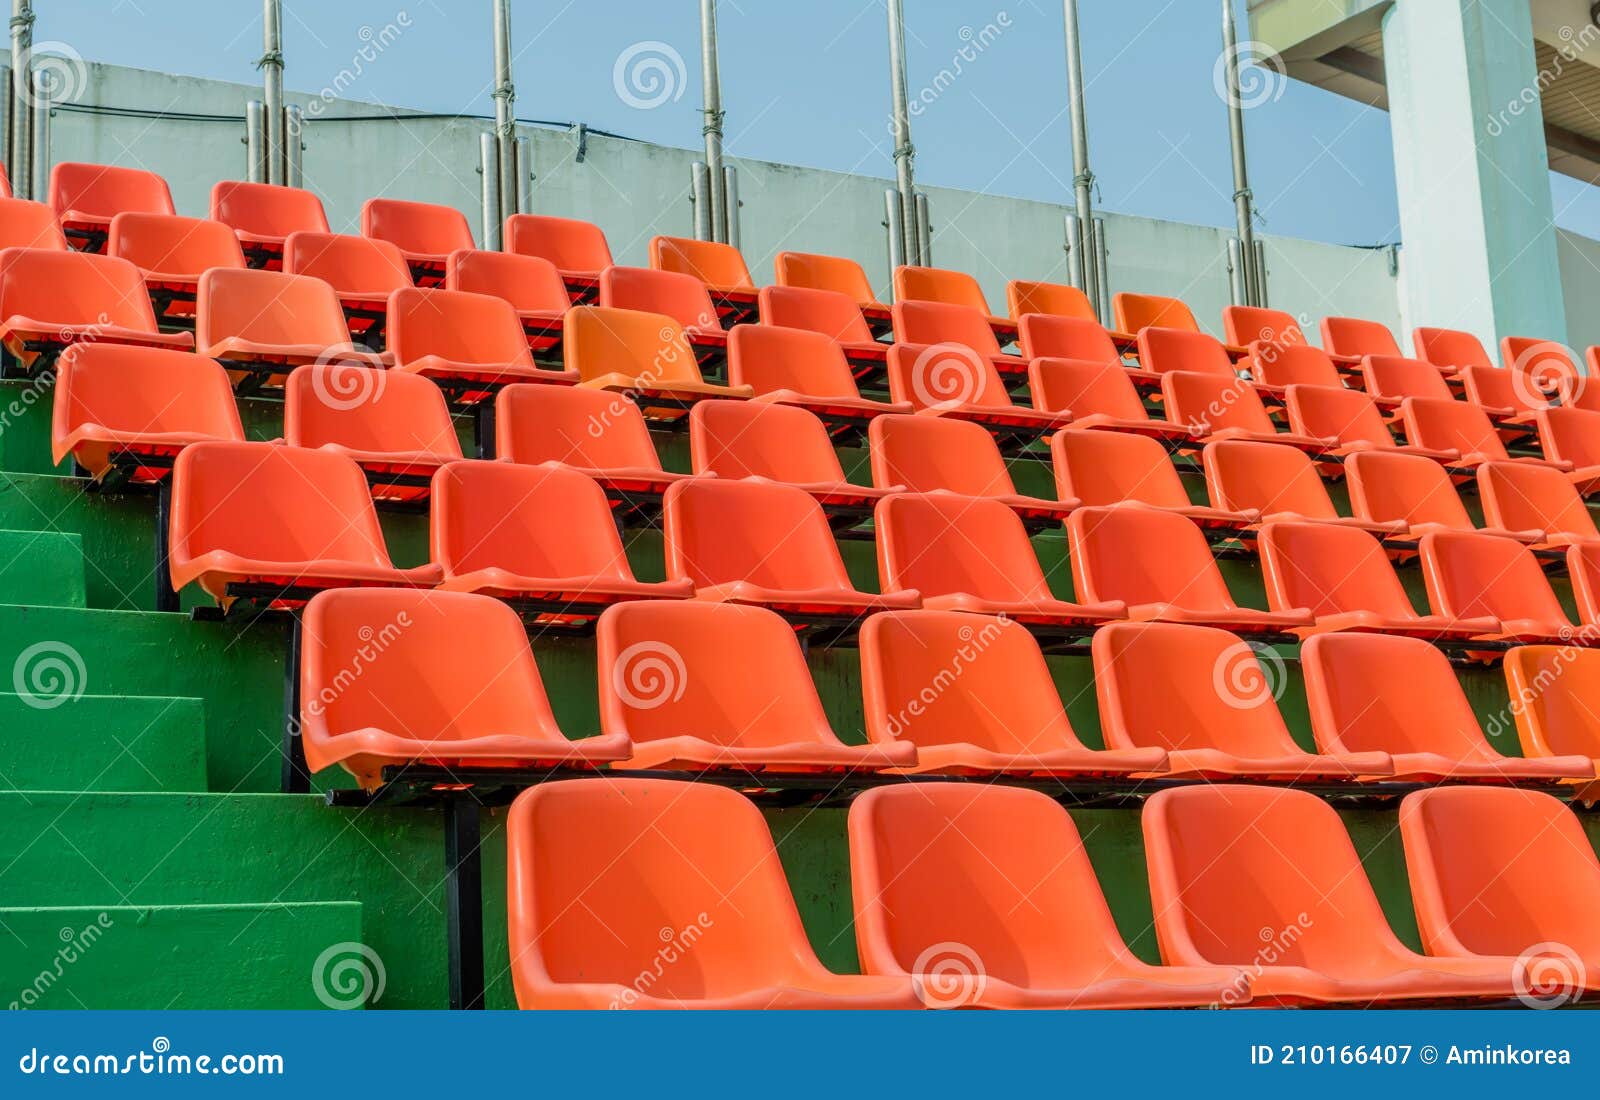 Empty Orange Stadium Seats at Sports Complex Stock Image - Image of ...